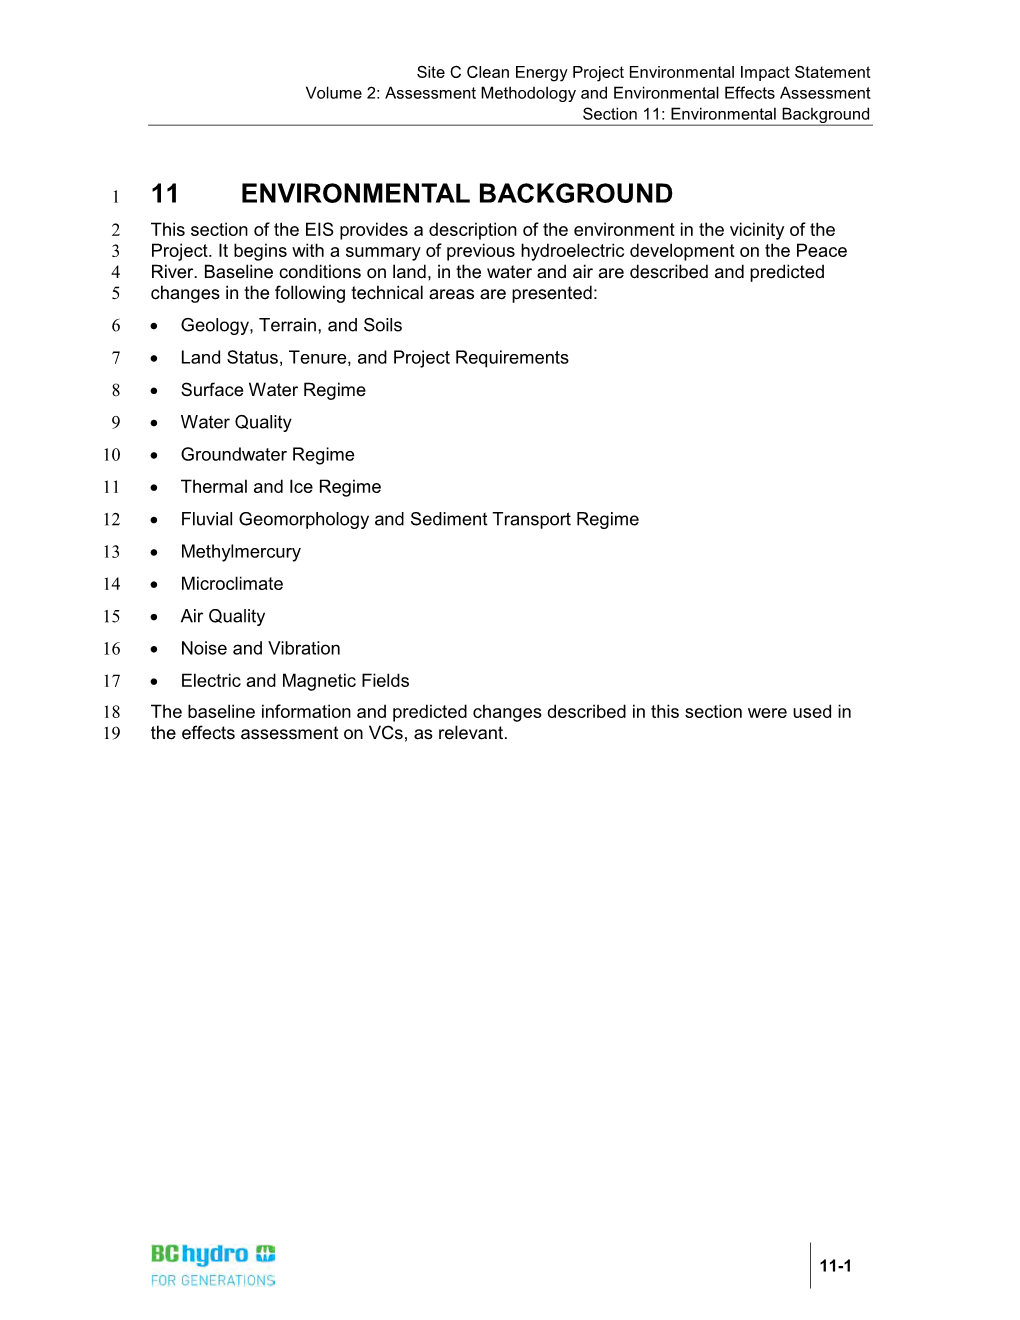 Environmental Background